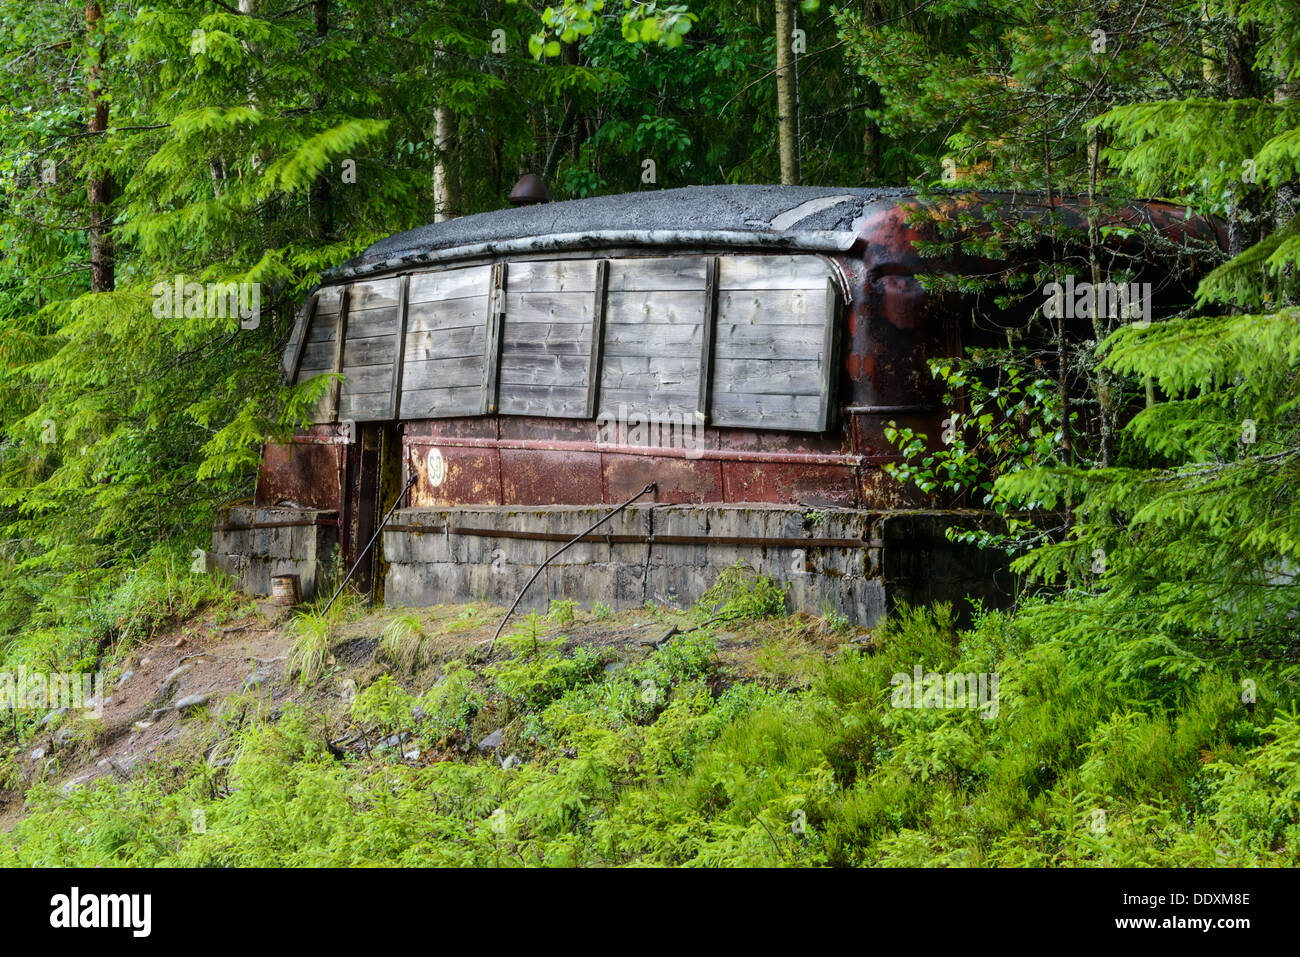 Abandoned bus in trees, Orsa, Dalarna, Sweden Stock Photo